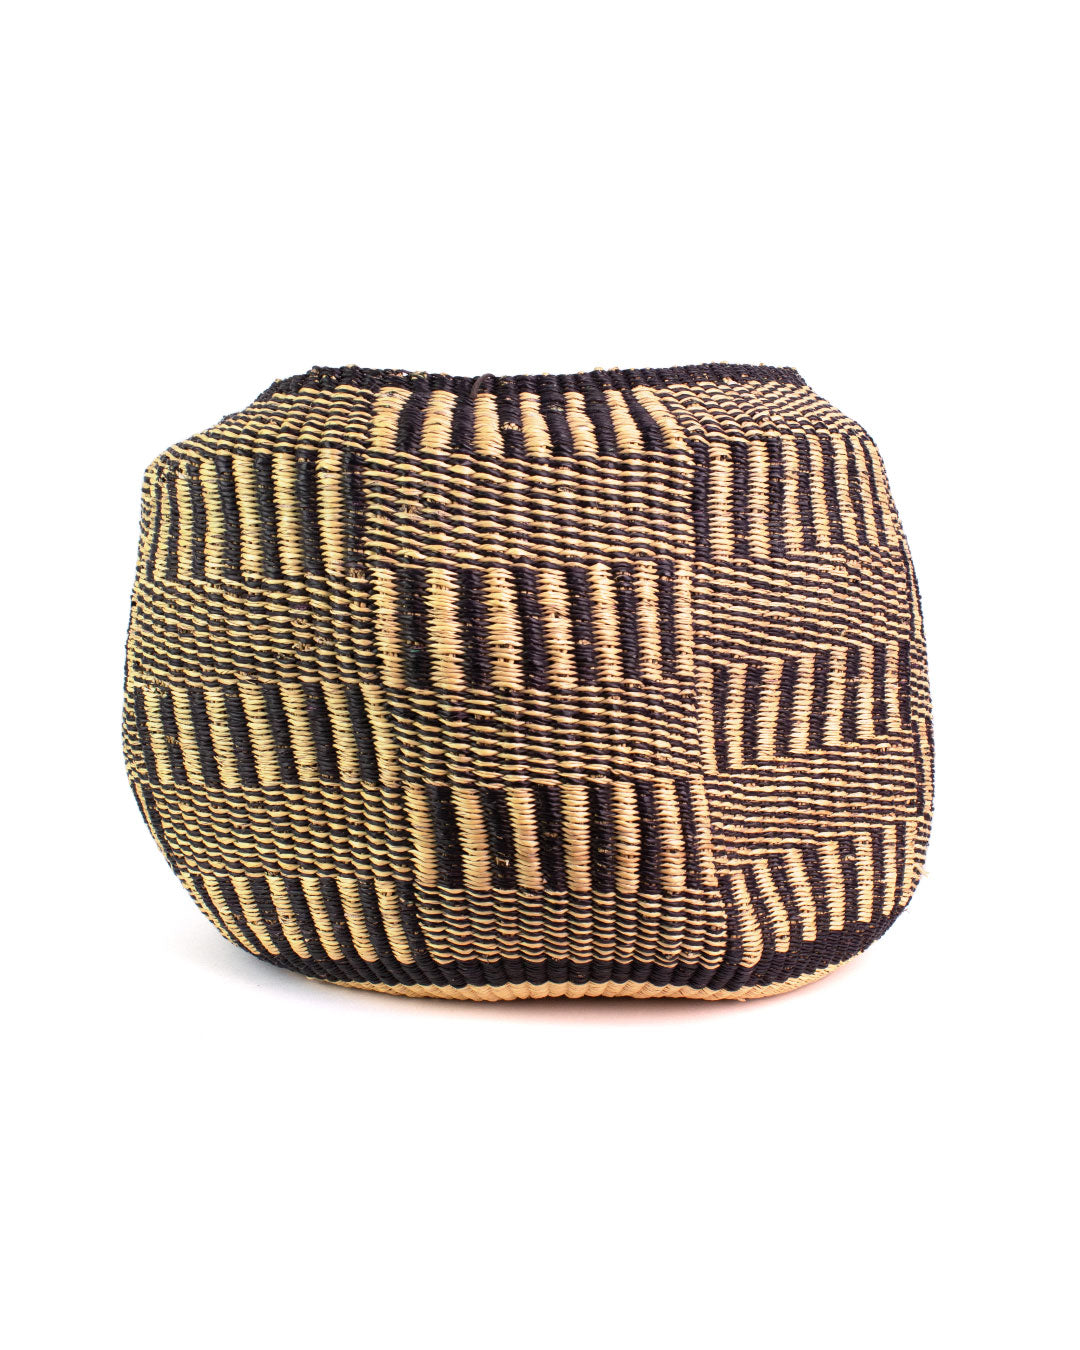 Aduco Basket Hand-woven Aketekete